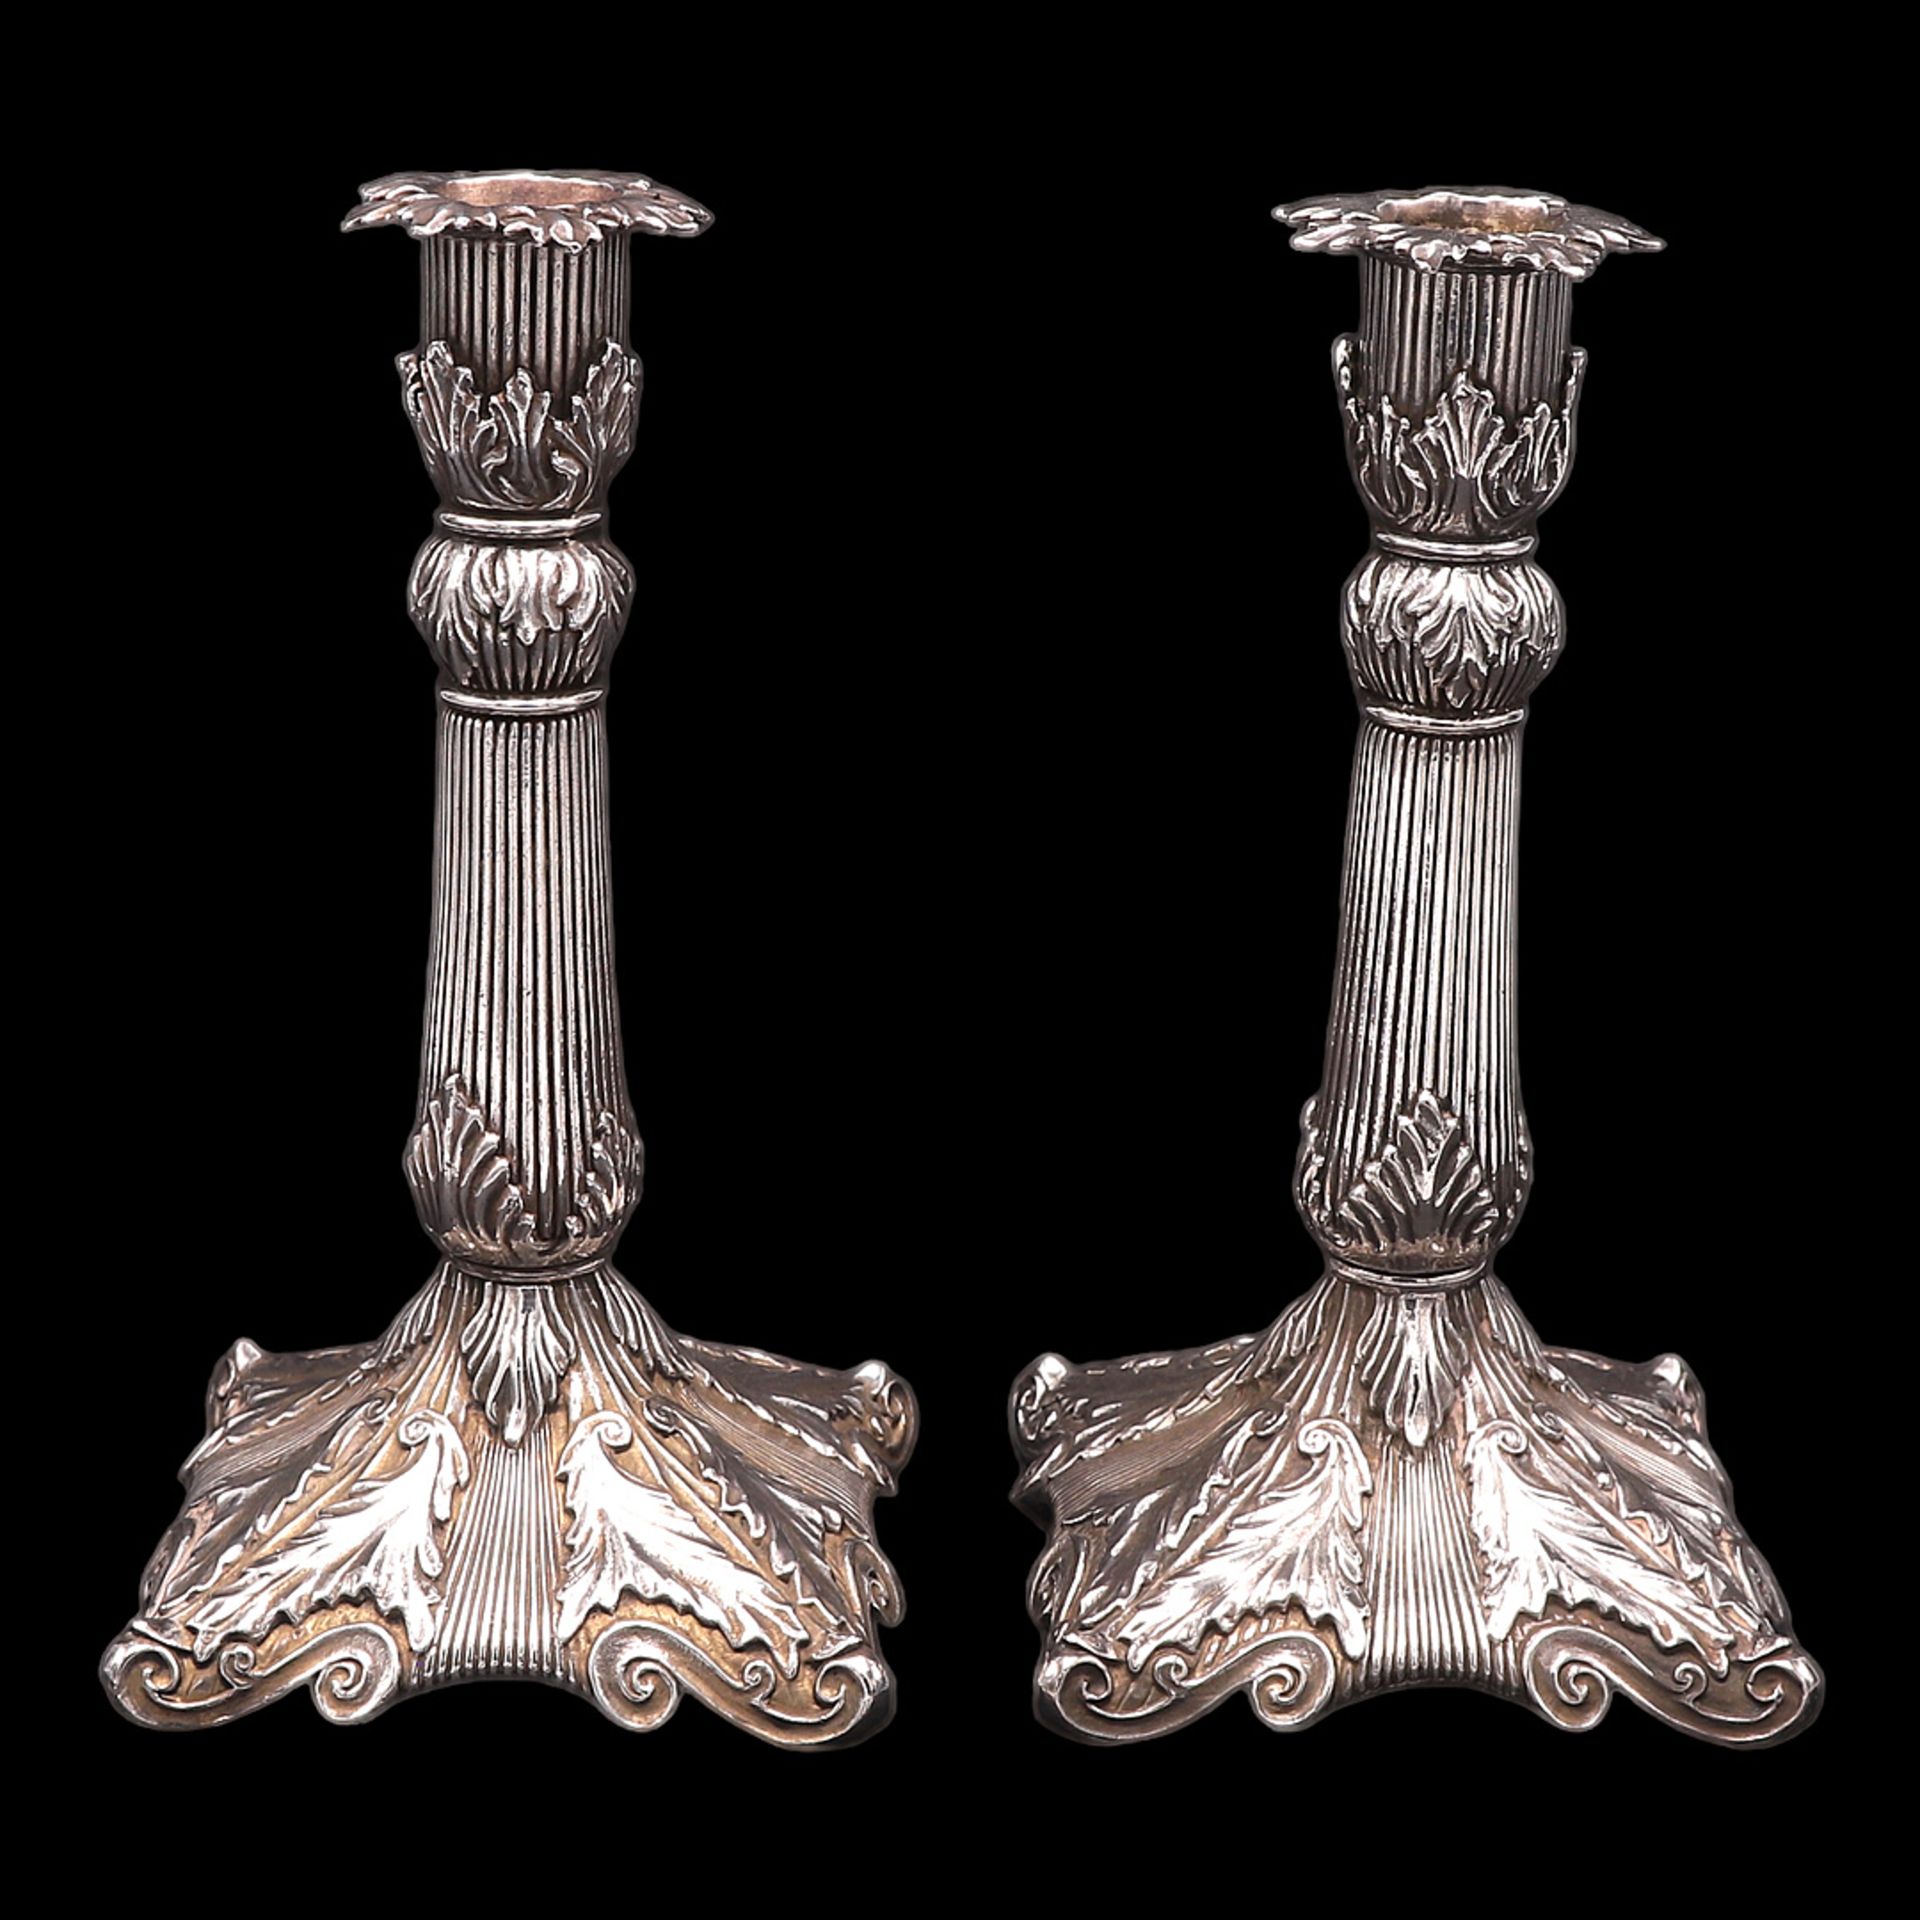 Pair of Christofle candlesticks, France, around 1880 - Image 2 of 3